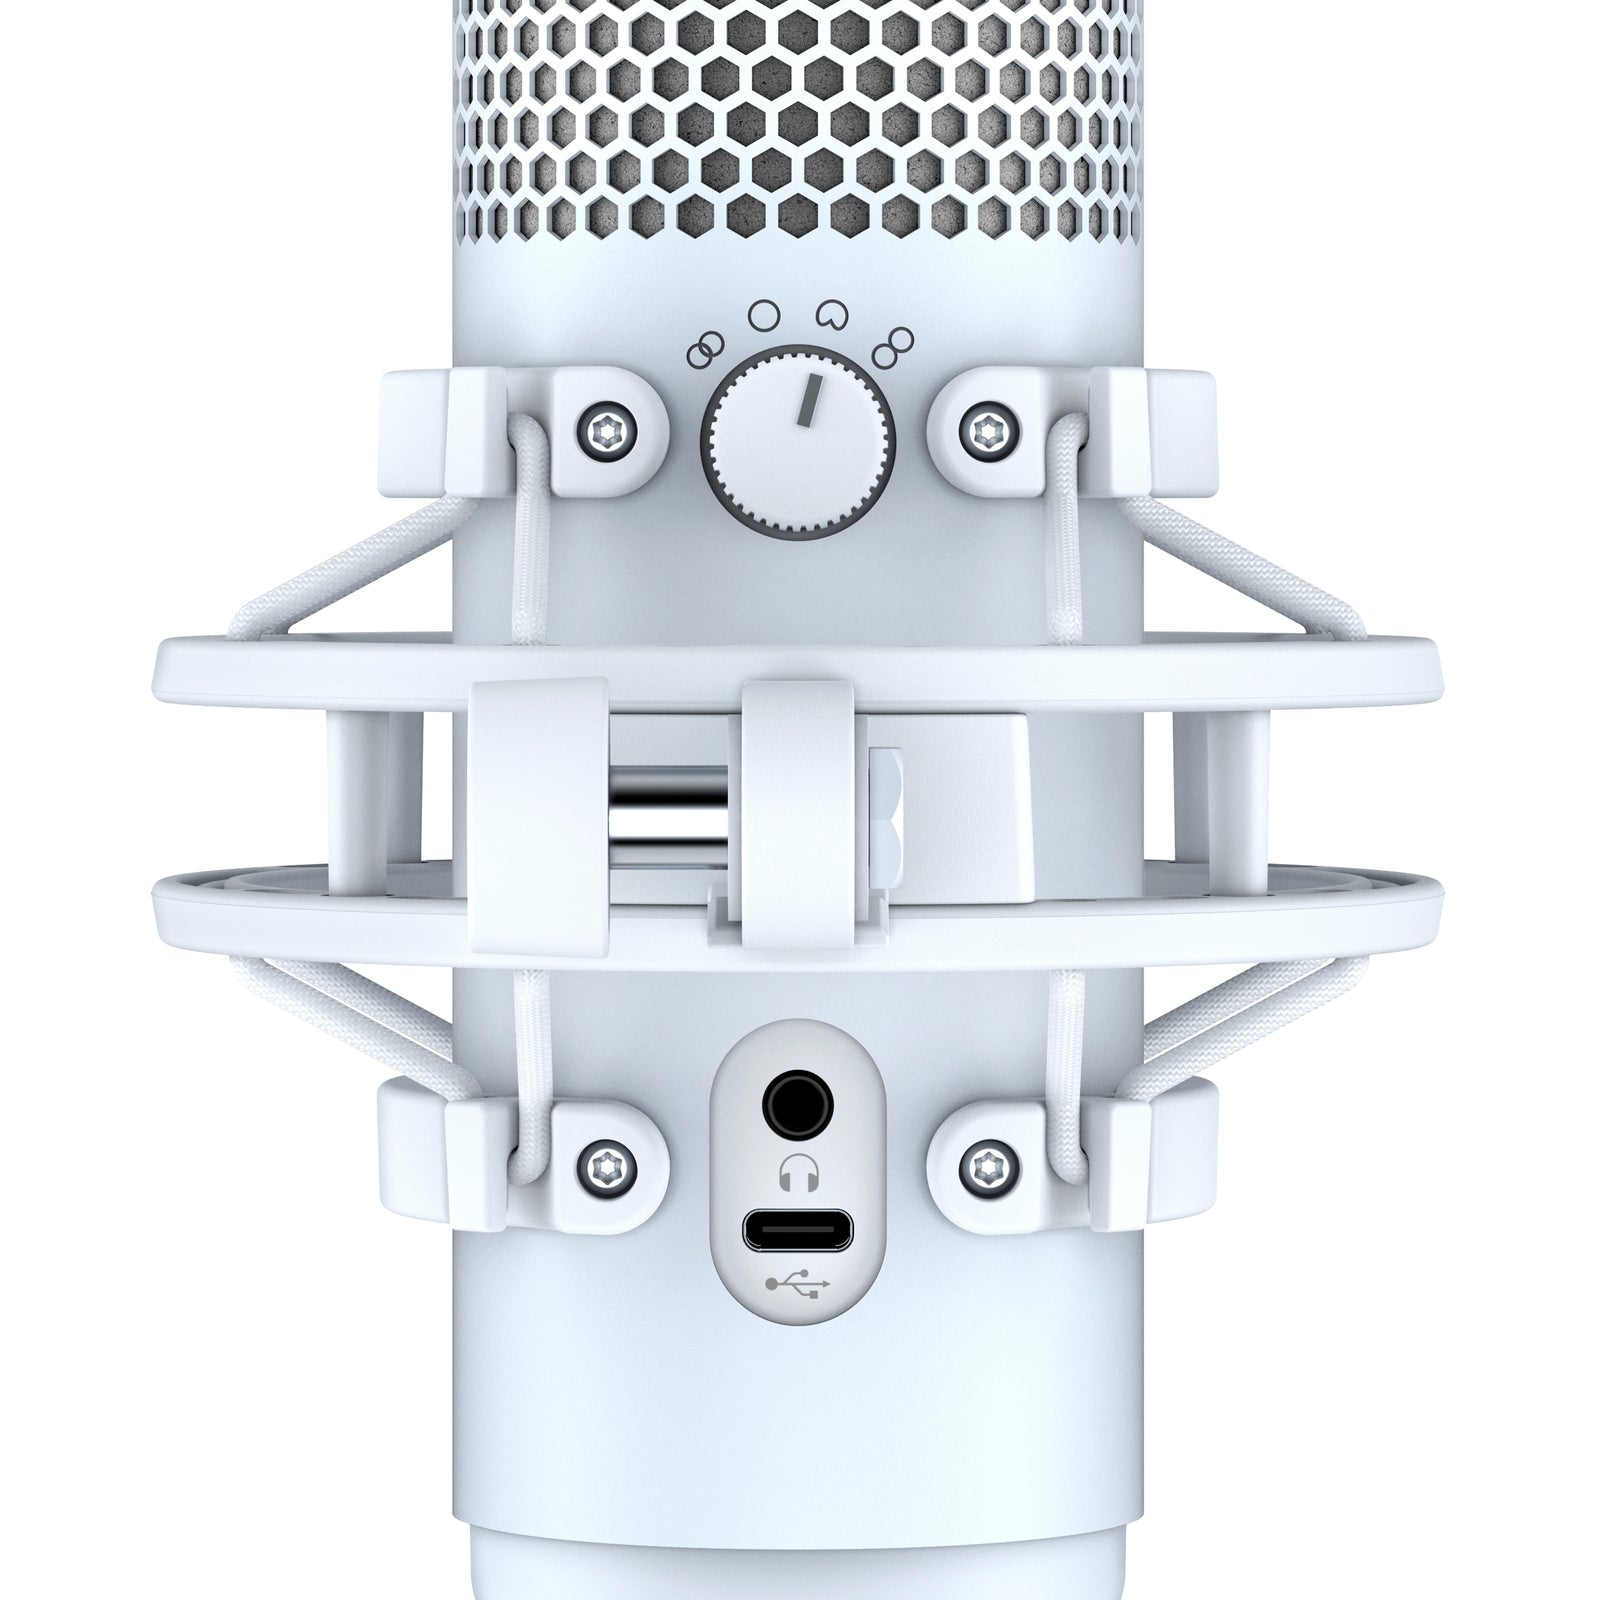 HyperX QuadCast S – USB Microphone – RGB Lighting